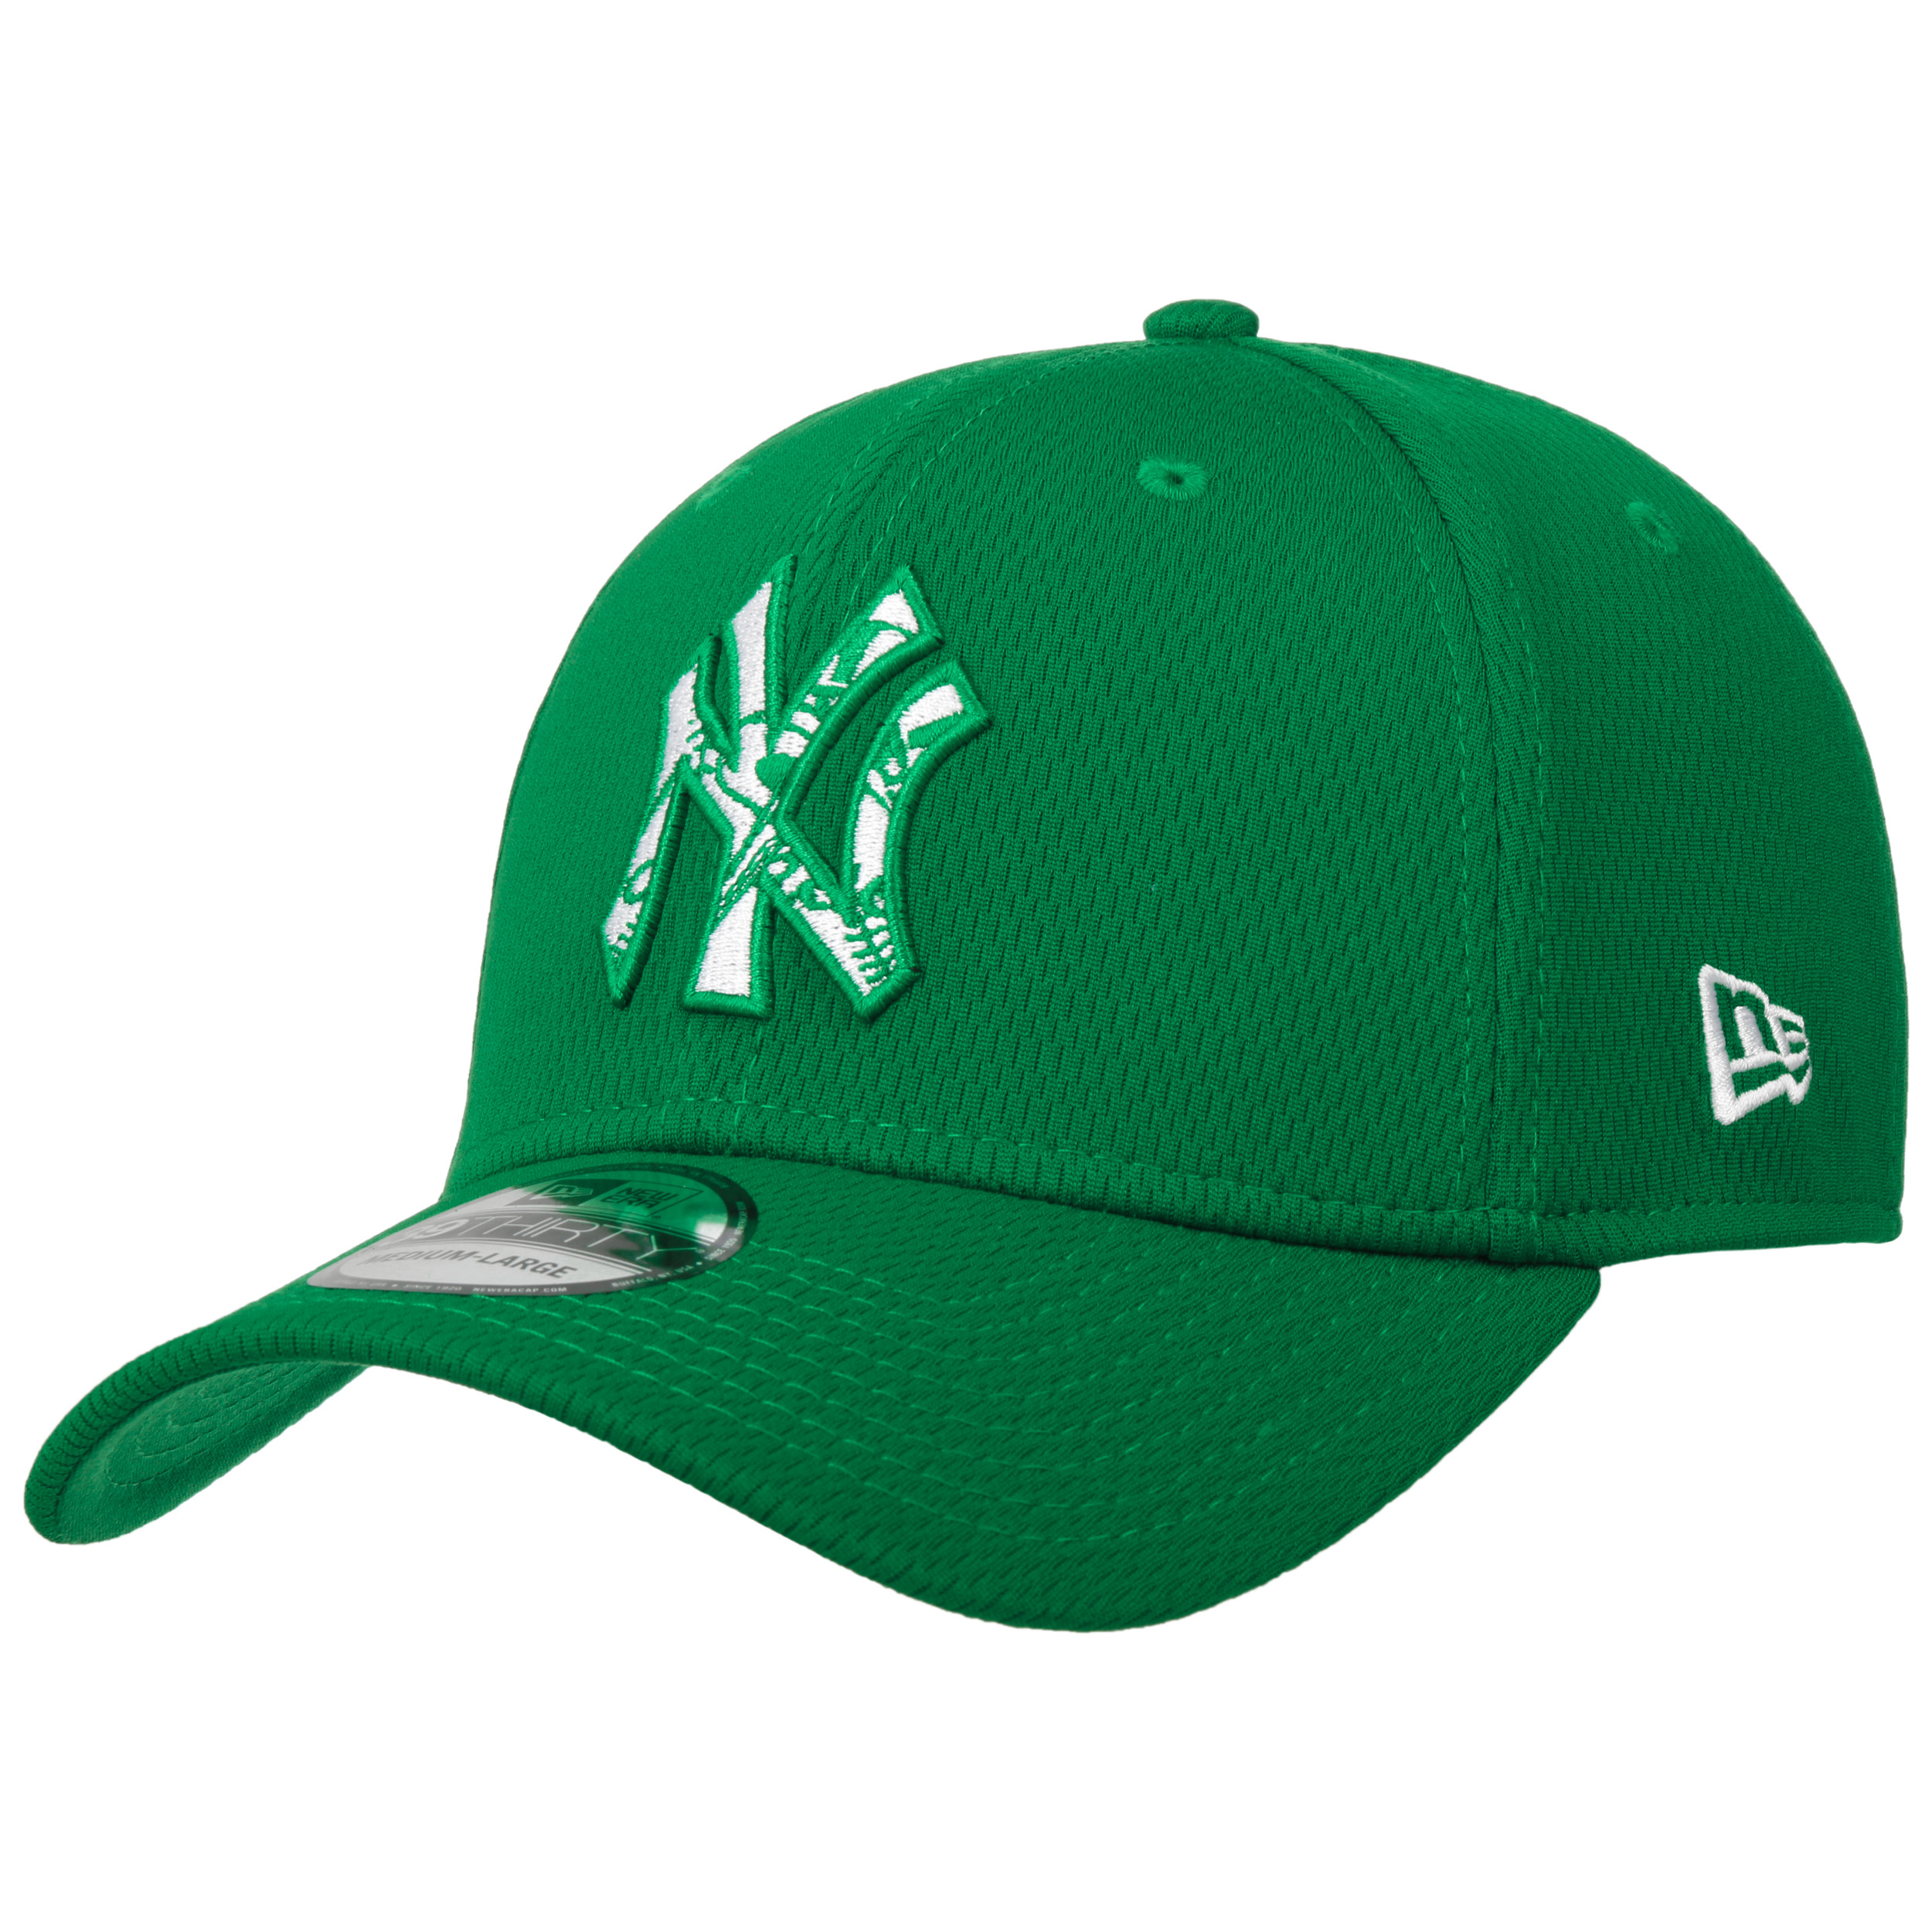 NEW ERA 39THIRTY BASEBALL CAP.NEW YORK YANKEES GREEN STRETCH COTTON BLEND  HAT C0